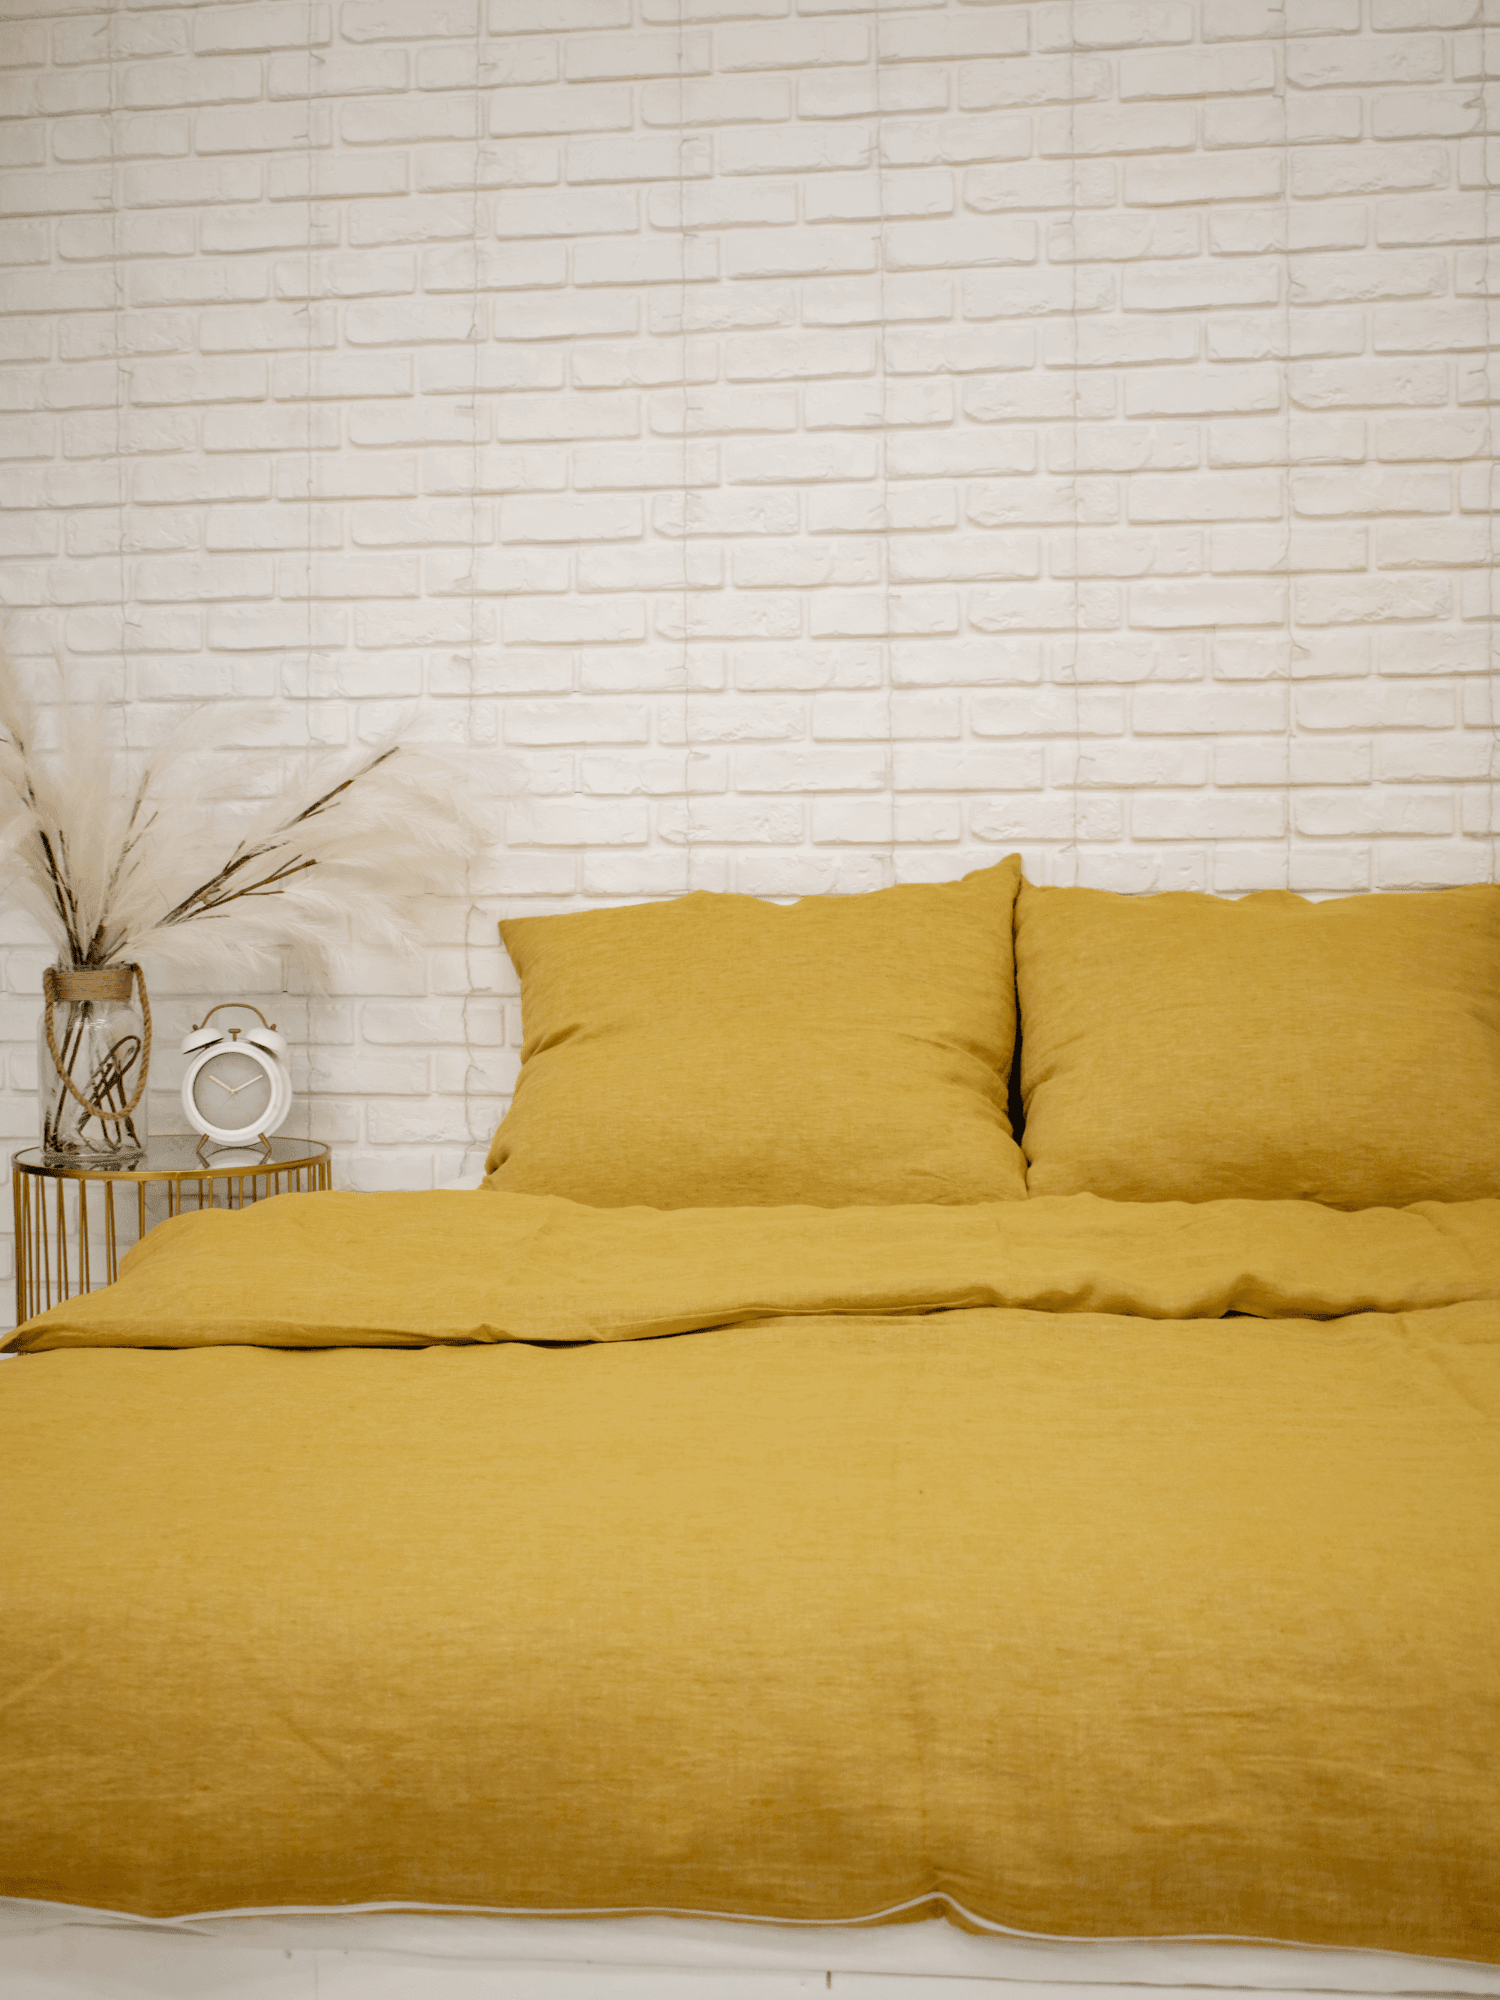 Linen Duvet Cover Set in Yellow (3 items) - Bedroom, Linen duvet cover - FlaxLin Eco Textiles